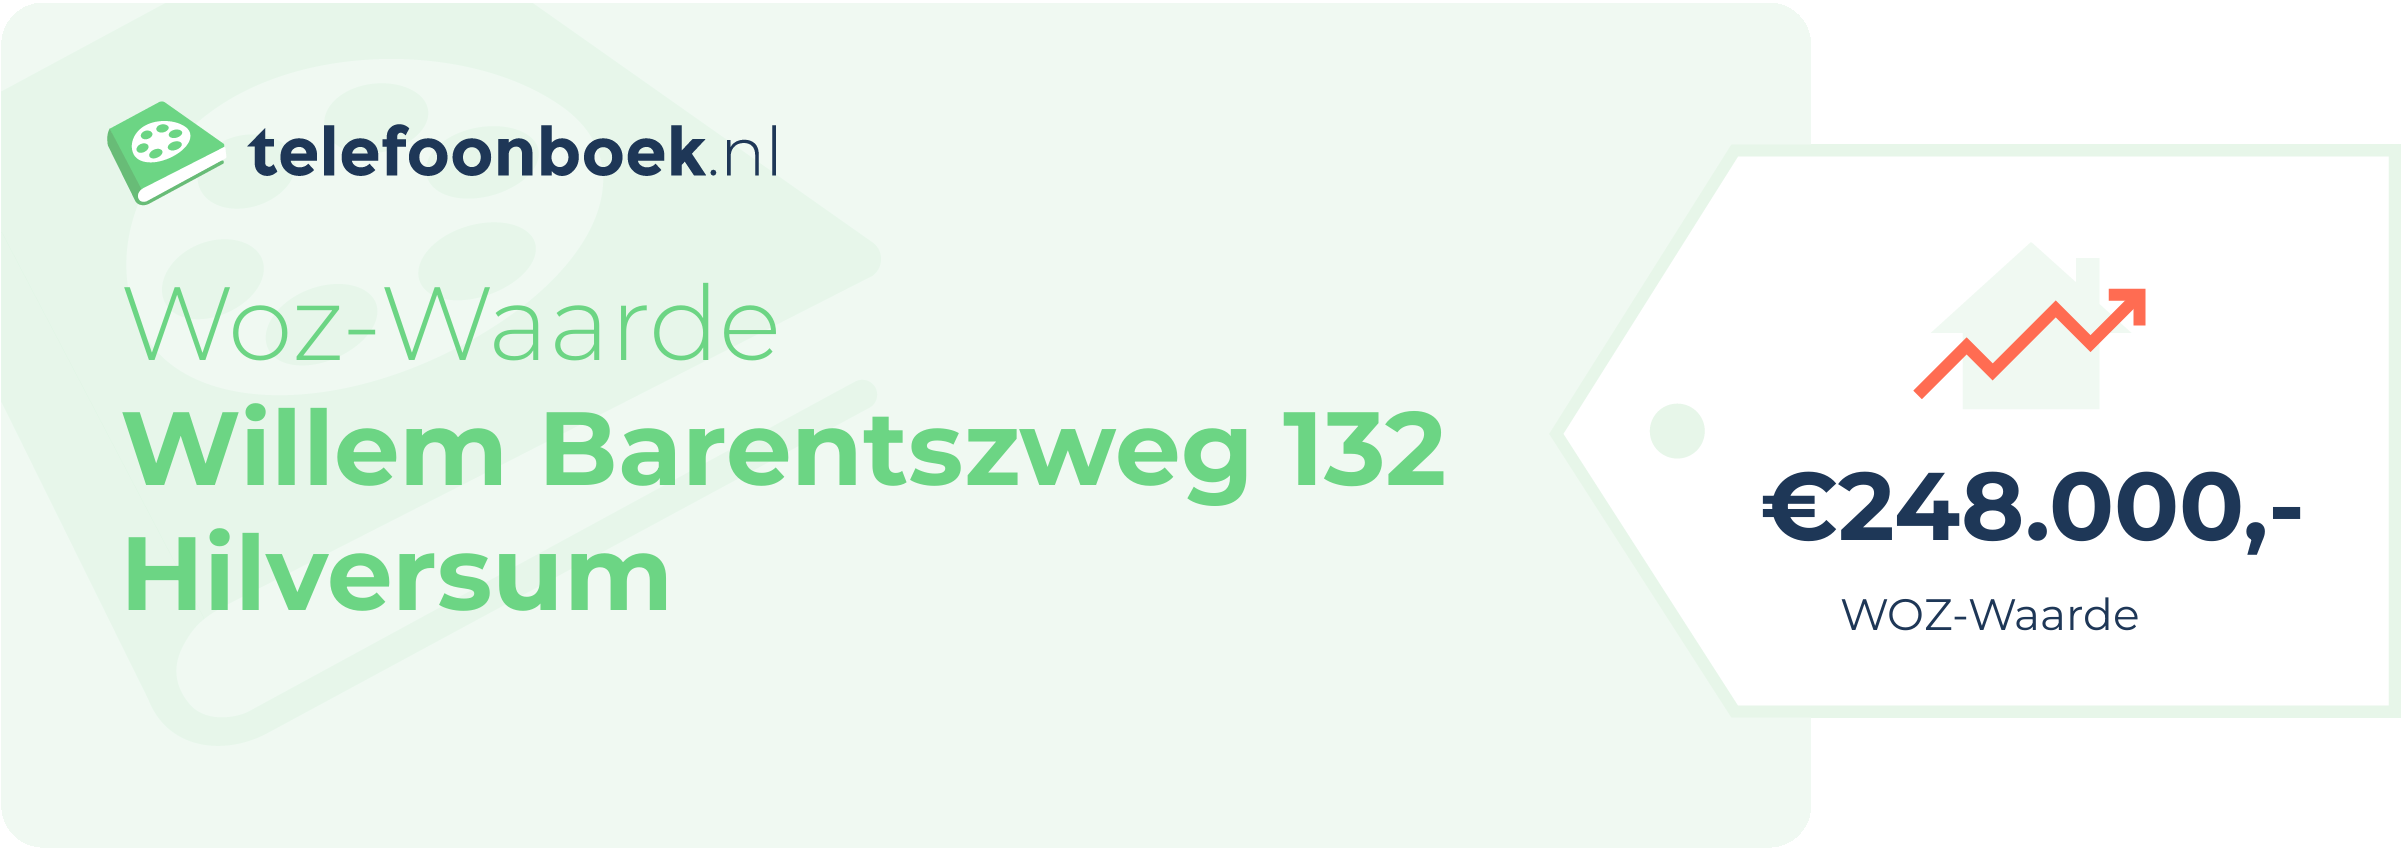 WOZ-waarde Willem Barentszweg 132 Hilversum